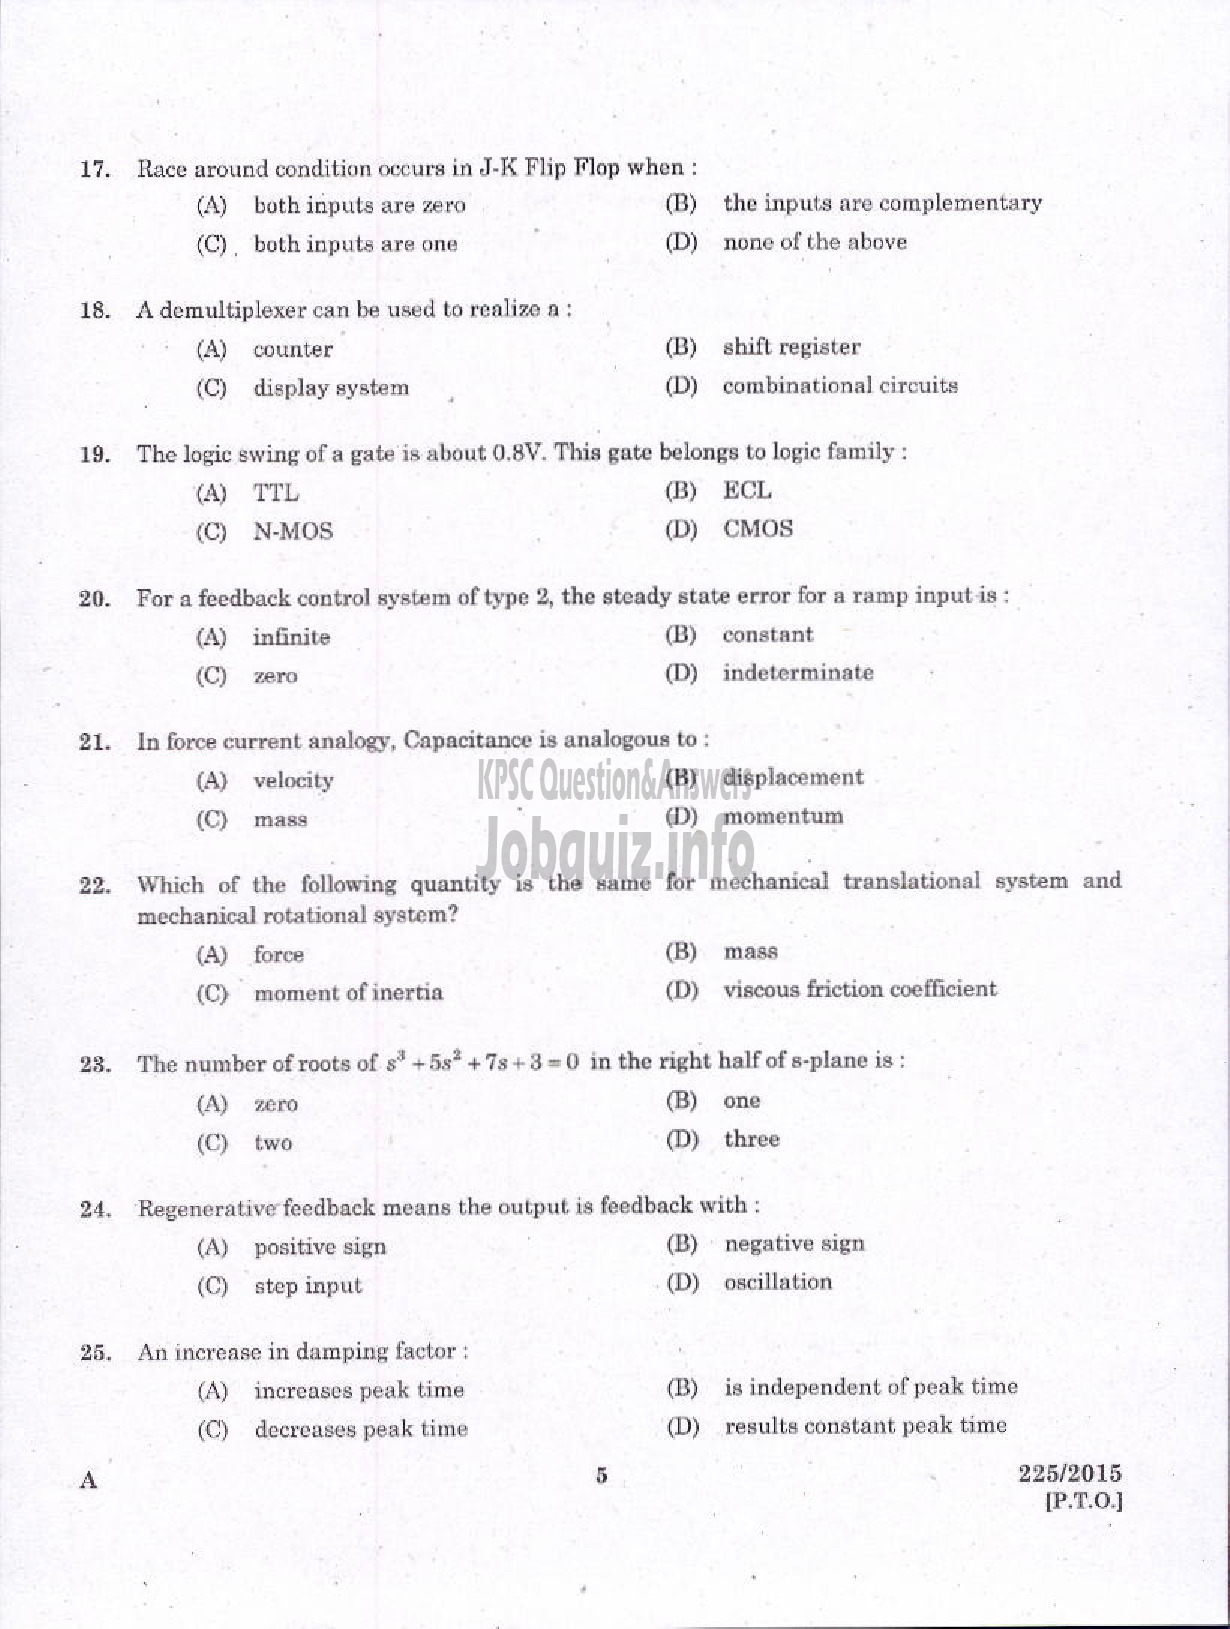 Kerala PSC Question Paper - VOCATIONAL TEACHER MAINTENANCE AND REPAIRS OF DOMESTIC APPLIANCES VHSE-3